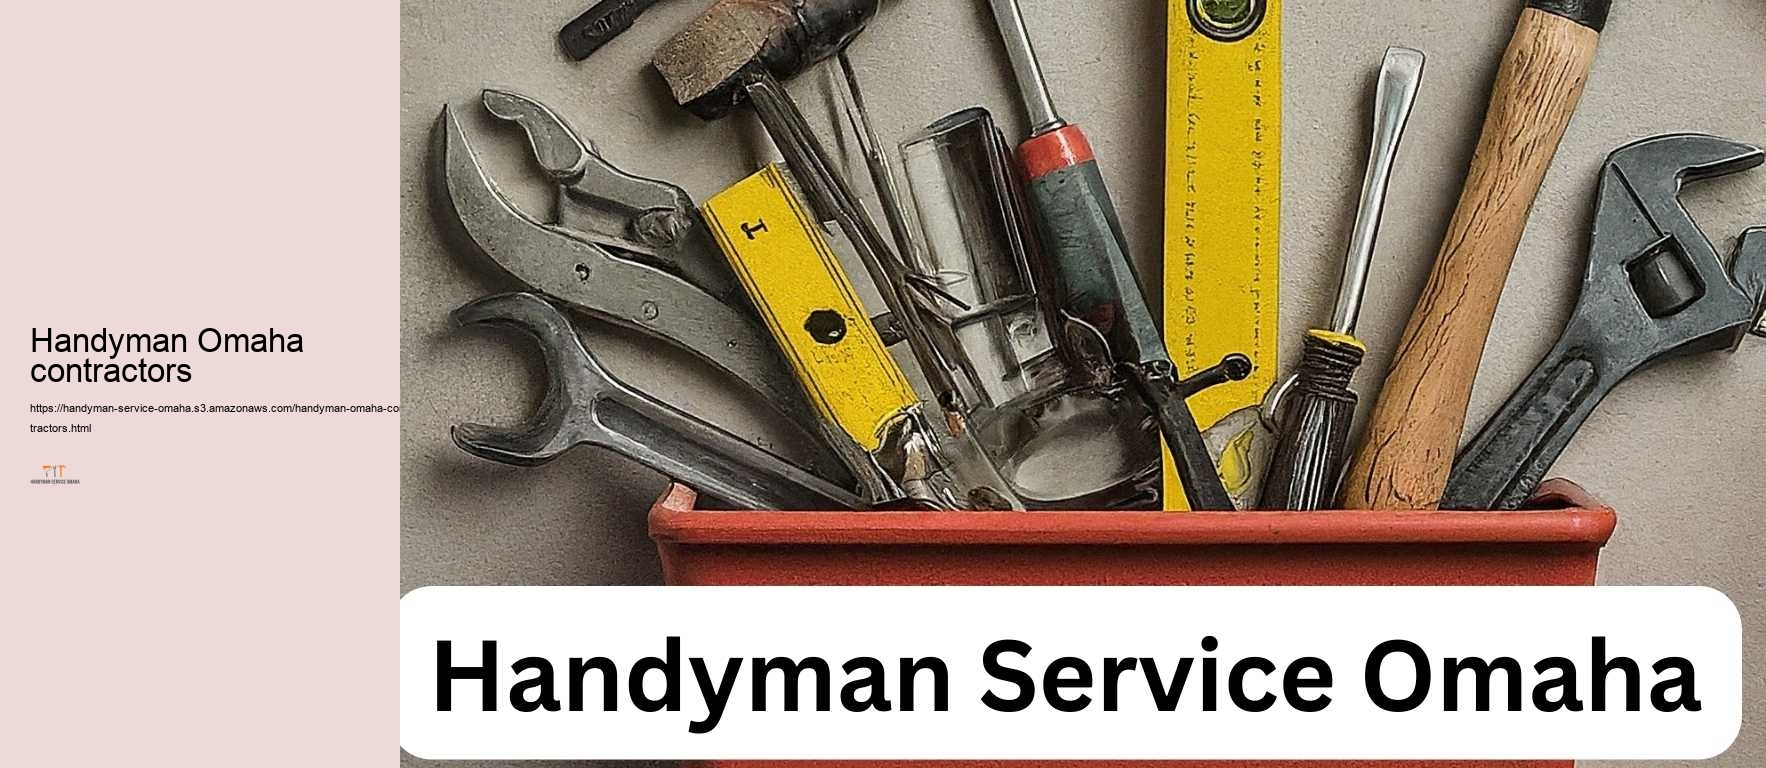 Handyman Omaha contractors